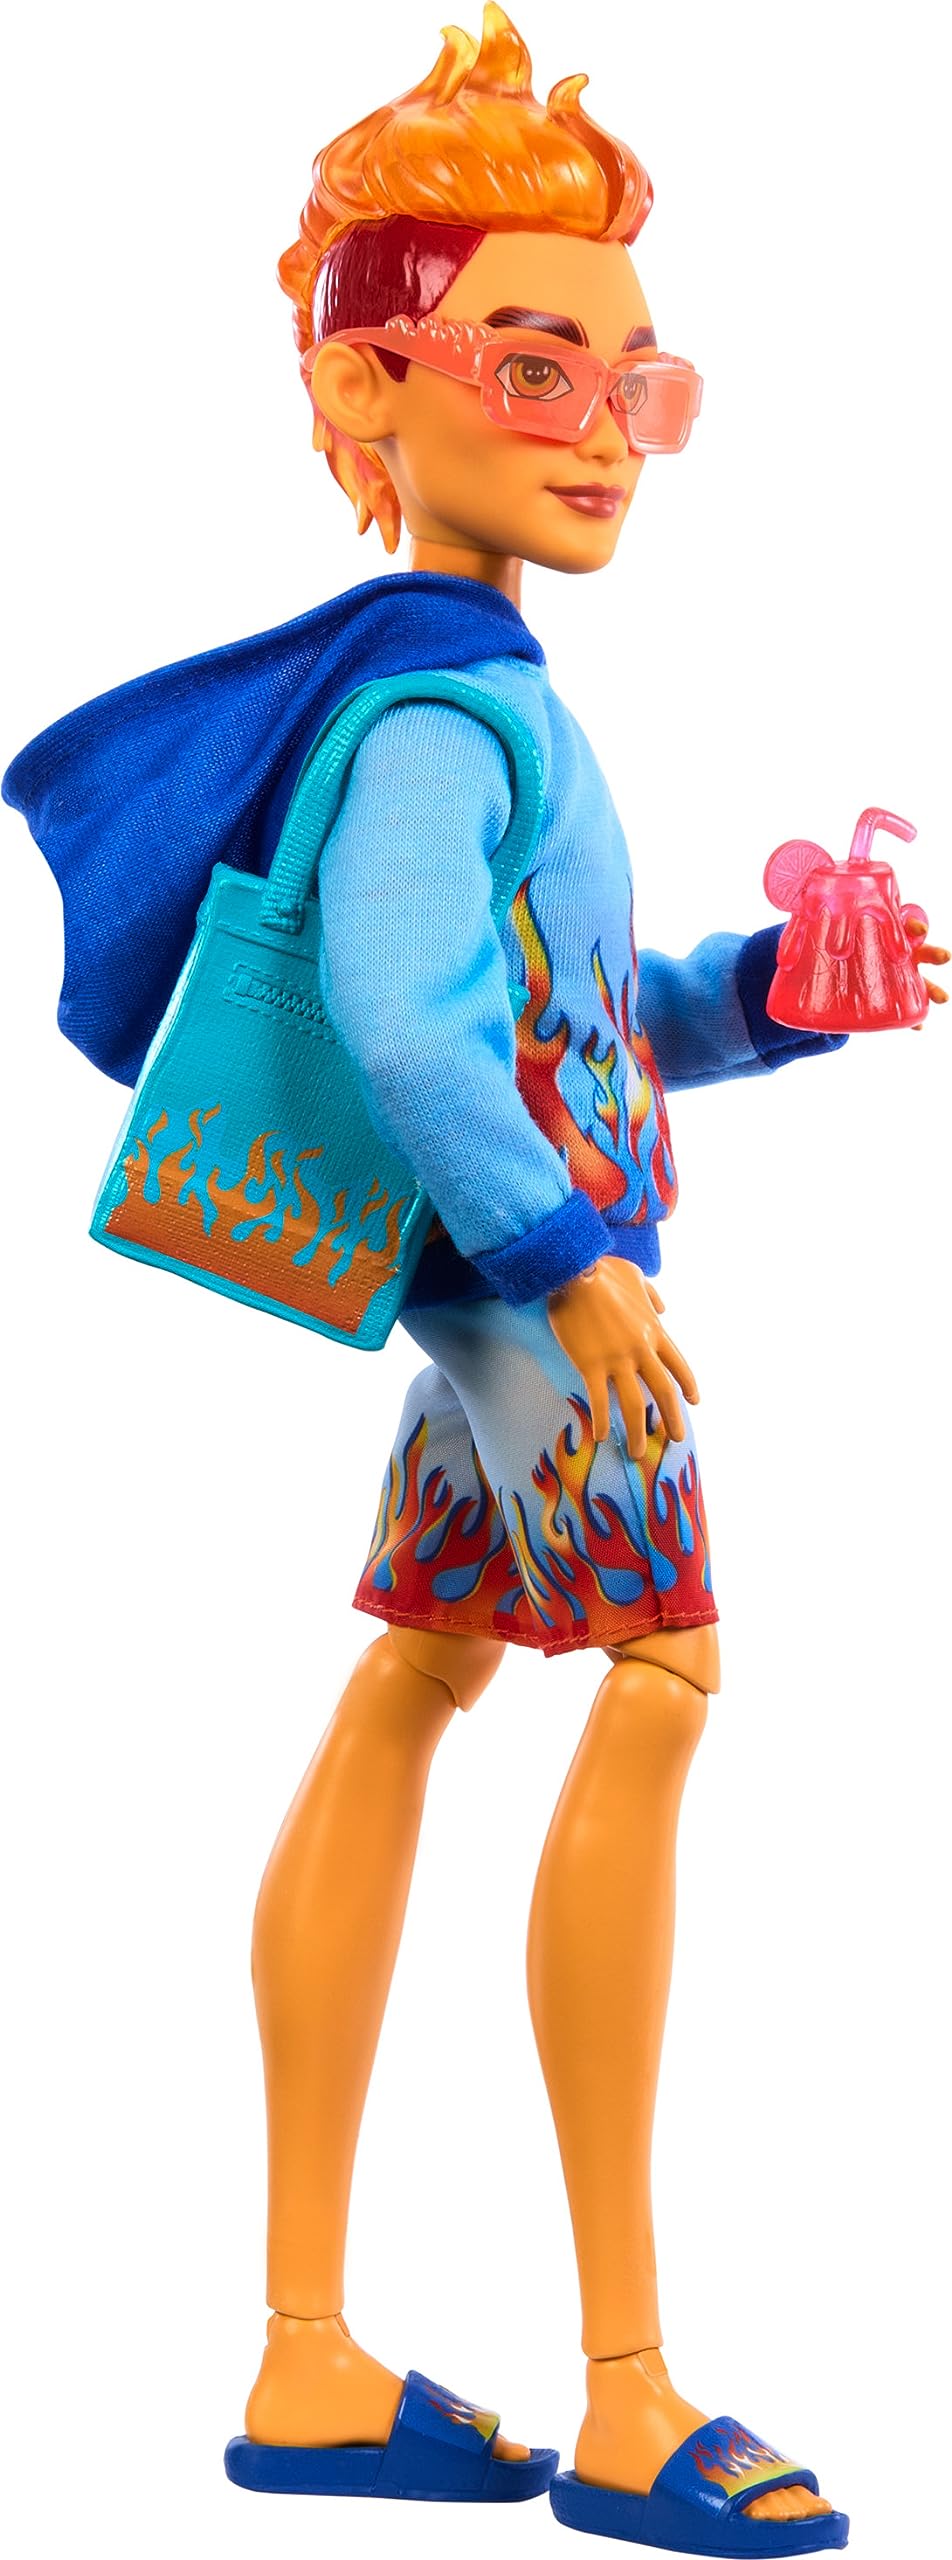 Monster High Scare-adise Island Heath Burns Doll with Flame Hoodie, Swim Trunks and Beach Accessories Like Sunglasses